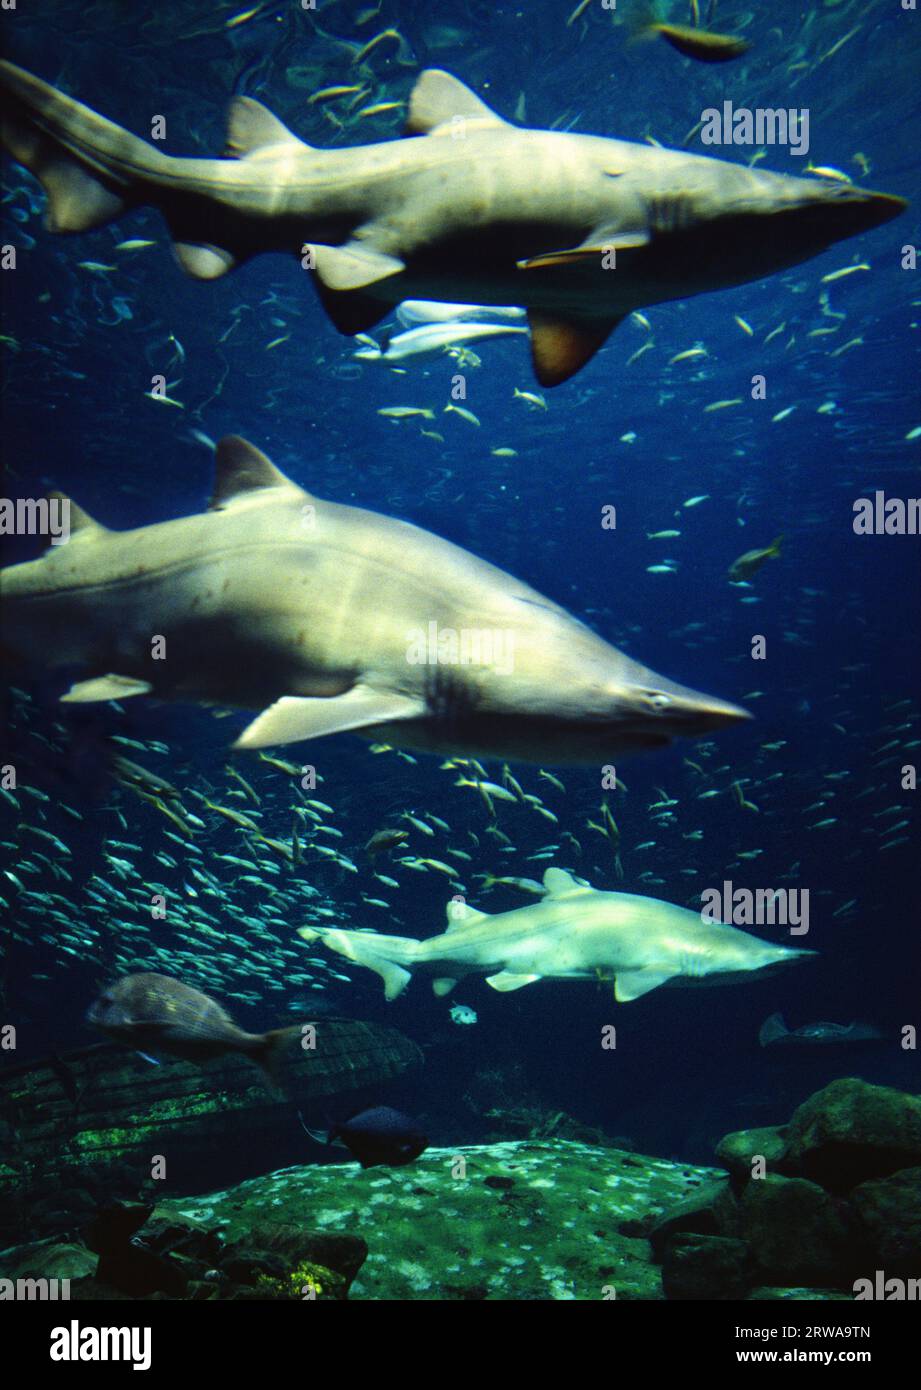 Great Barrier Reef - Sydney Aquarium Australia; Sharks in Australia Stock Photo